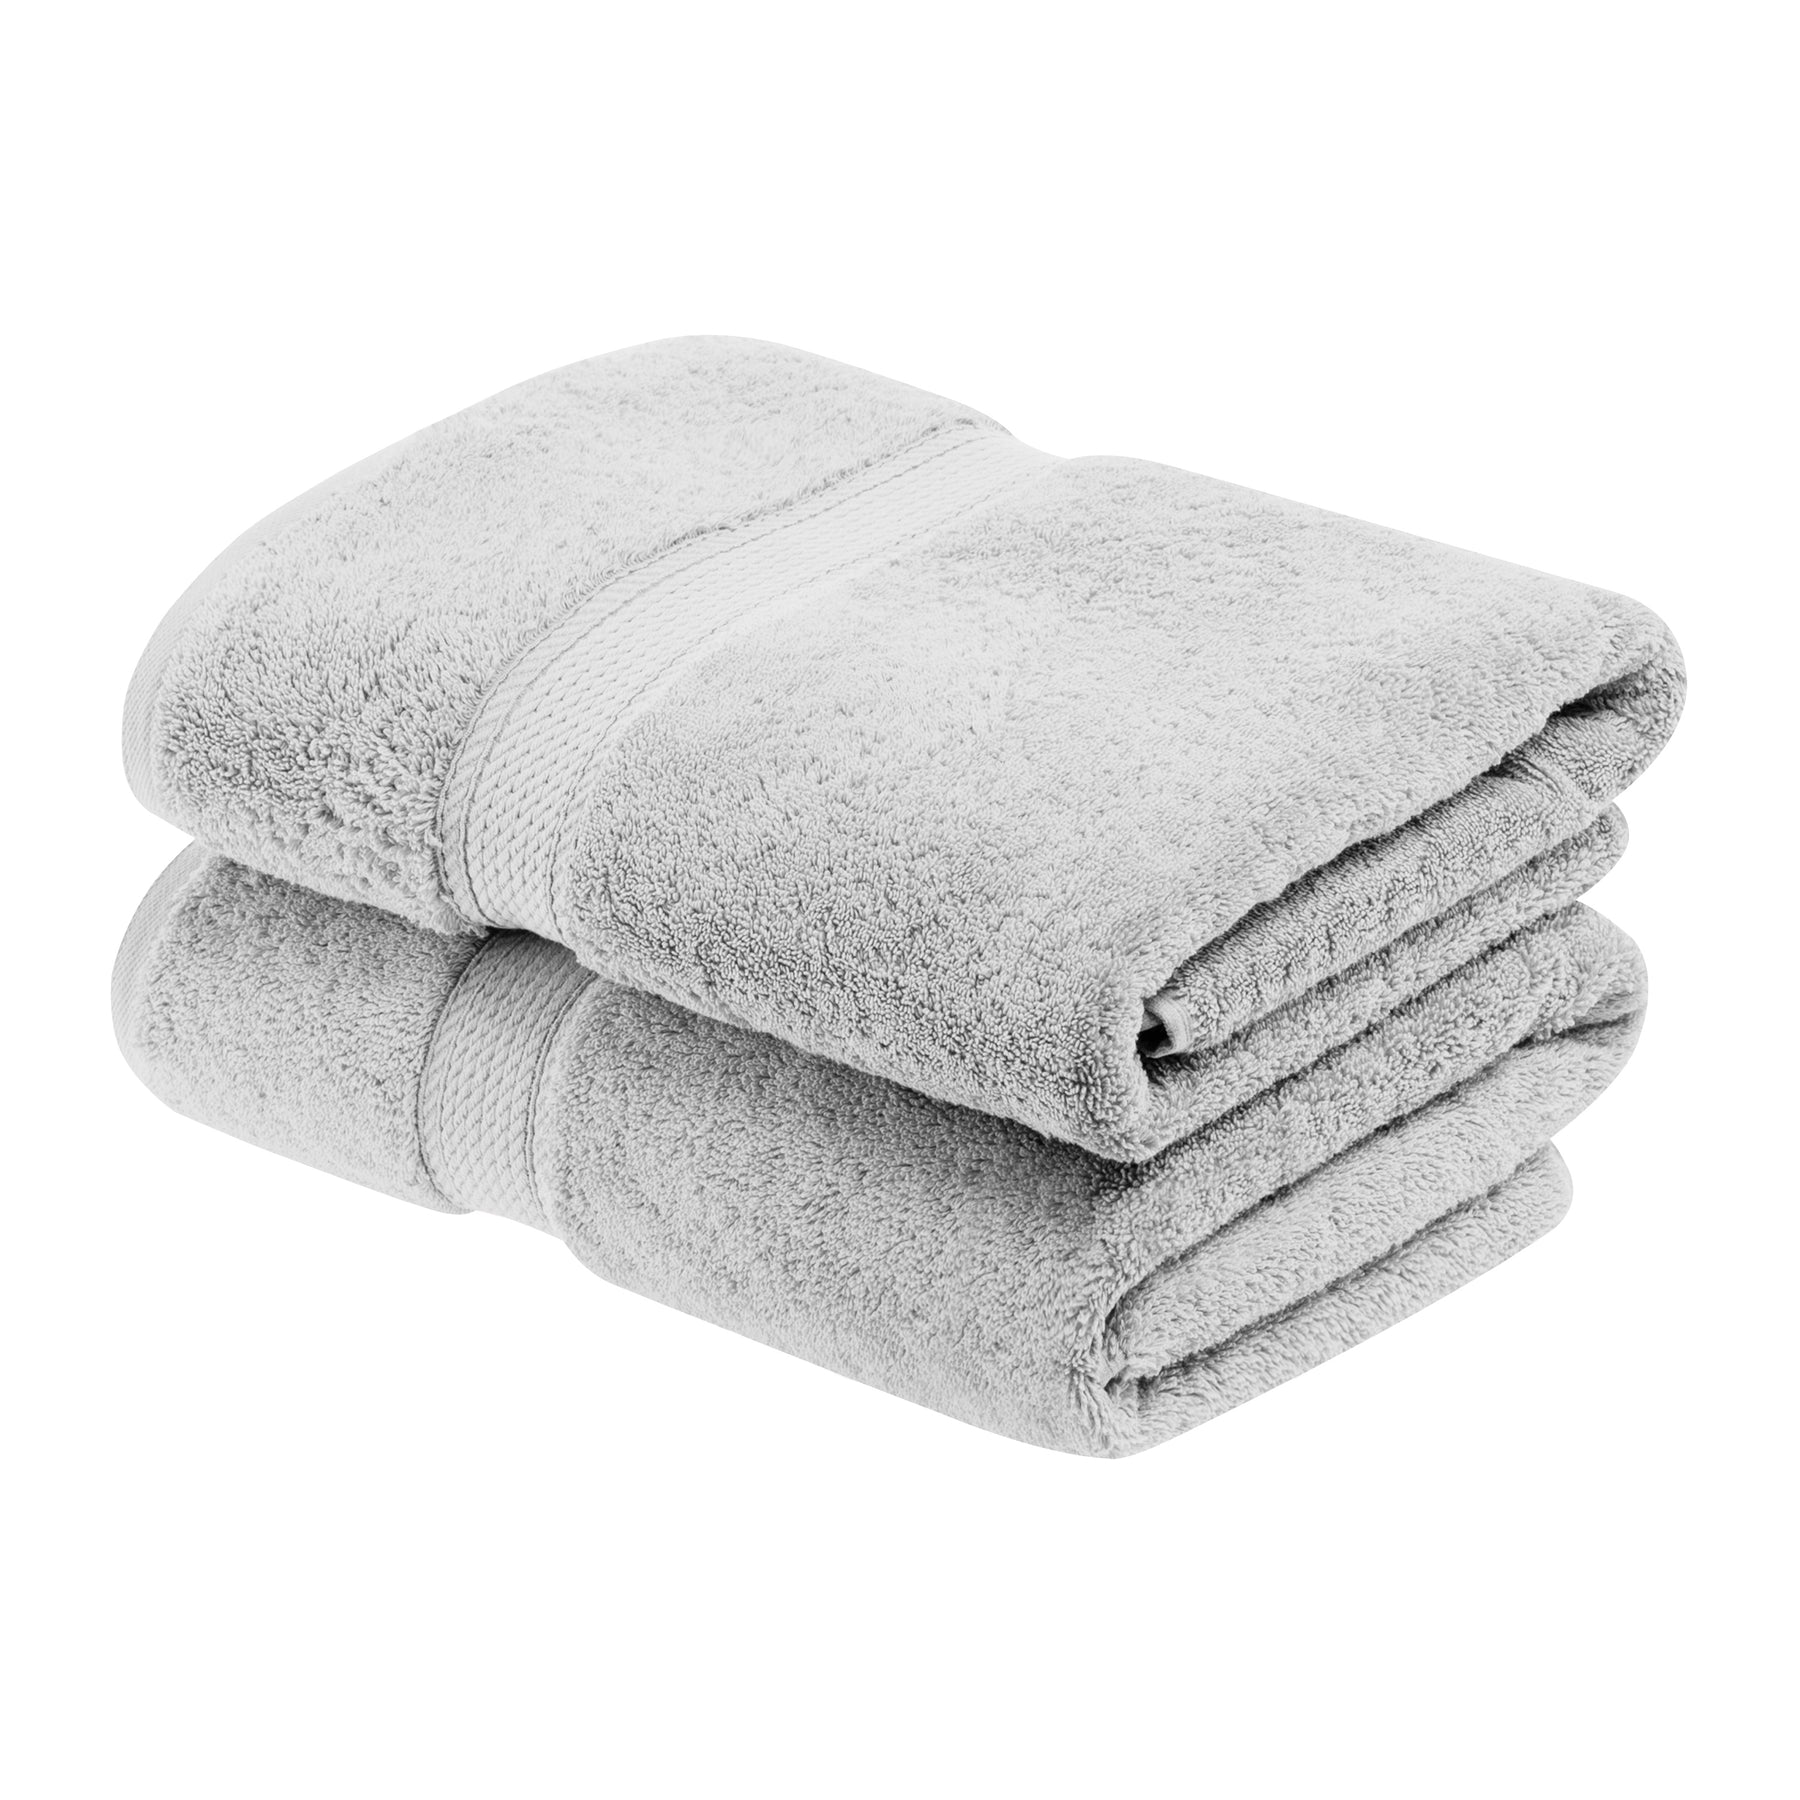 900 GSM Egyptian Cotton Hand Towel Set Of 4, Soft, Plush